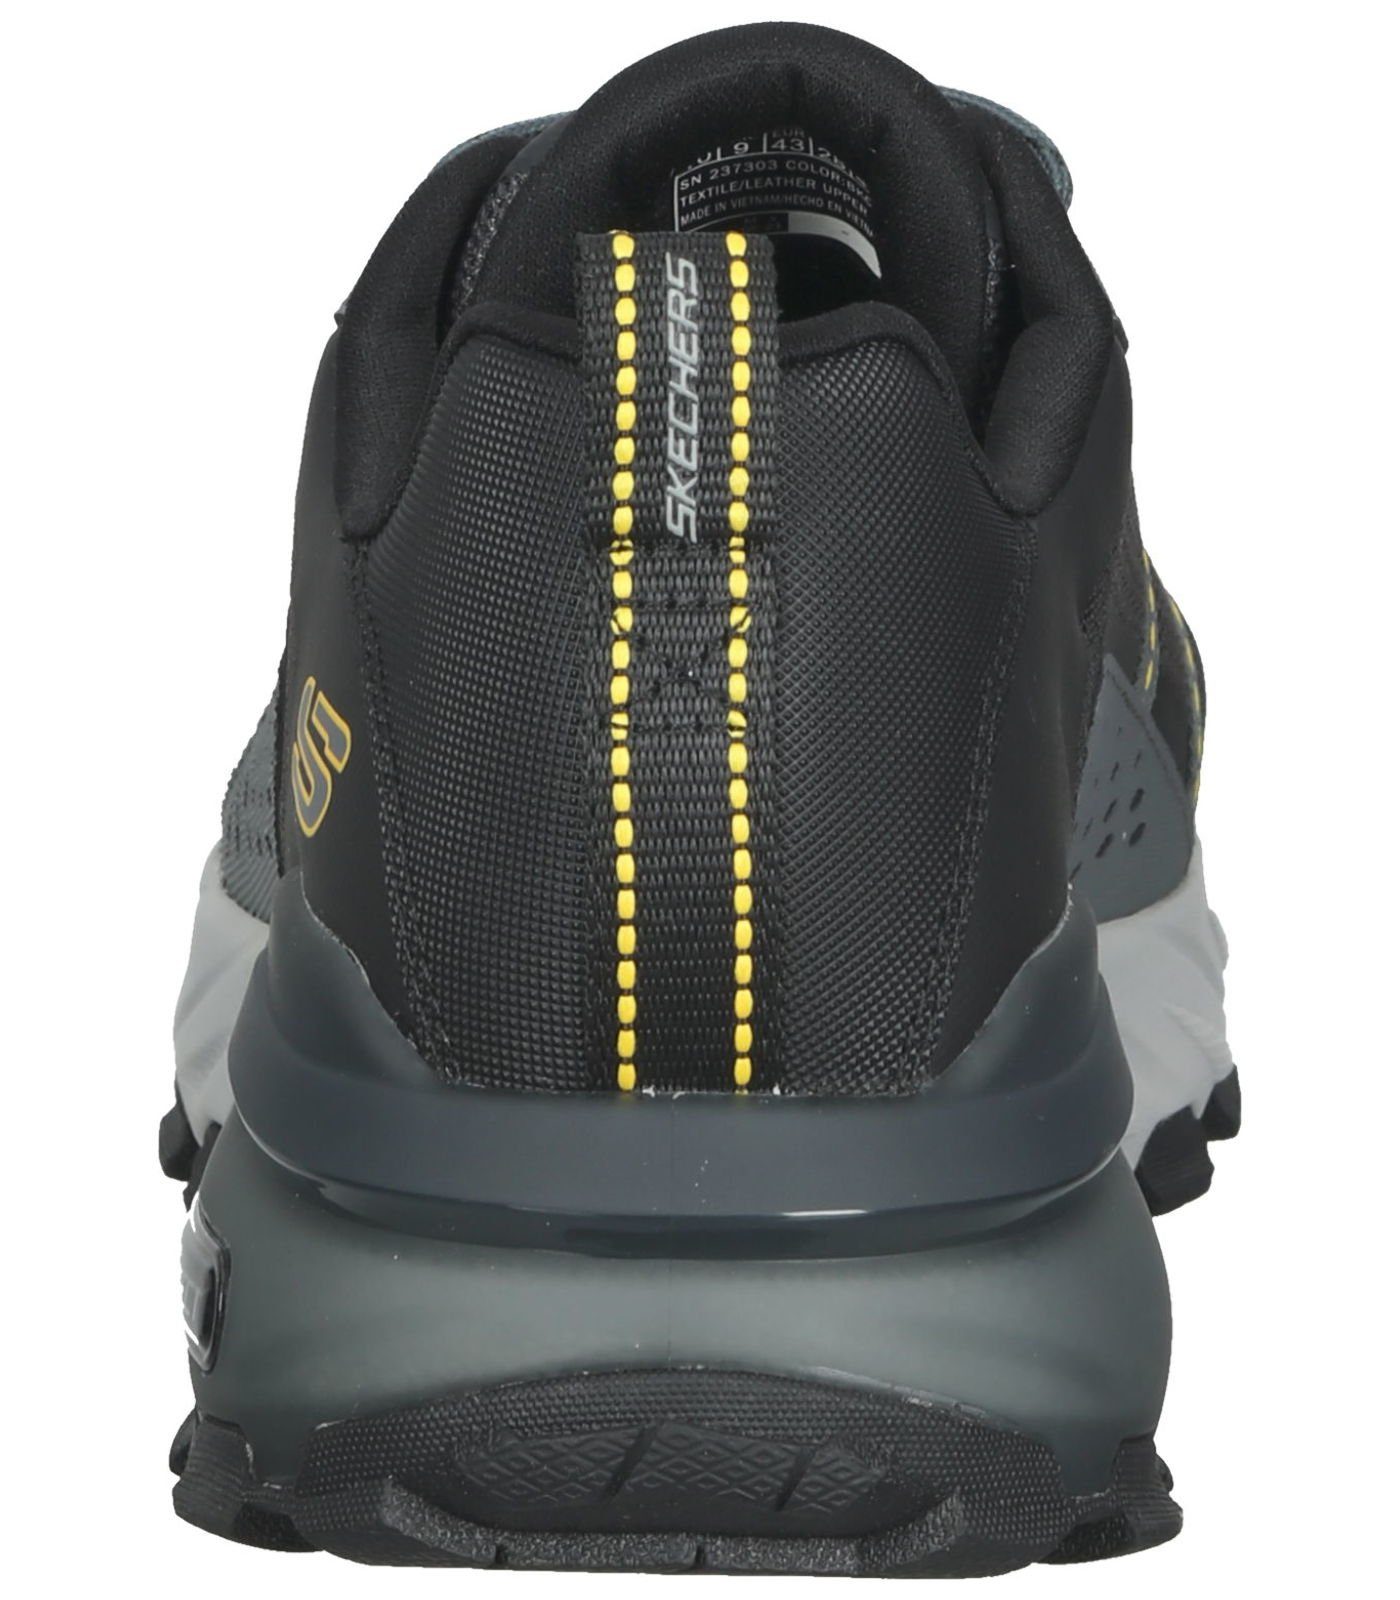 Sneaker Leather-Synthetic Sneaker - Skechers Schwarz Leder Mesh-Charcoal Trim / Black BKCC